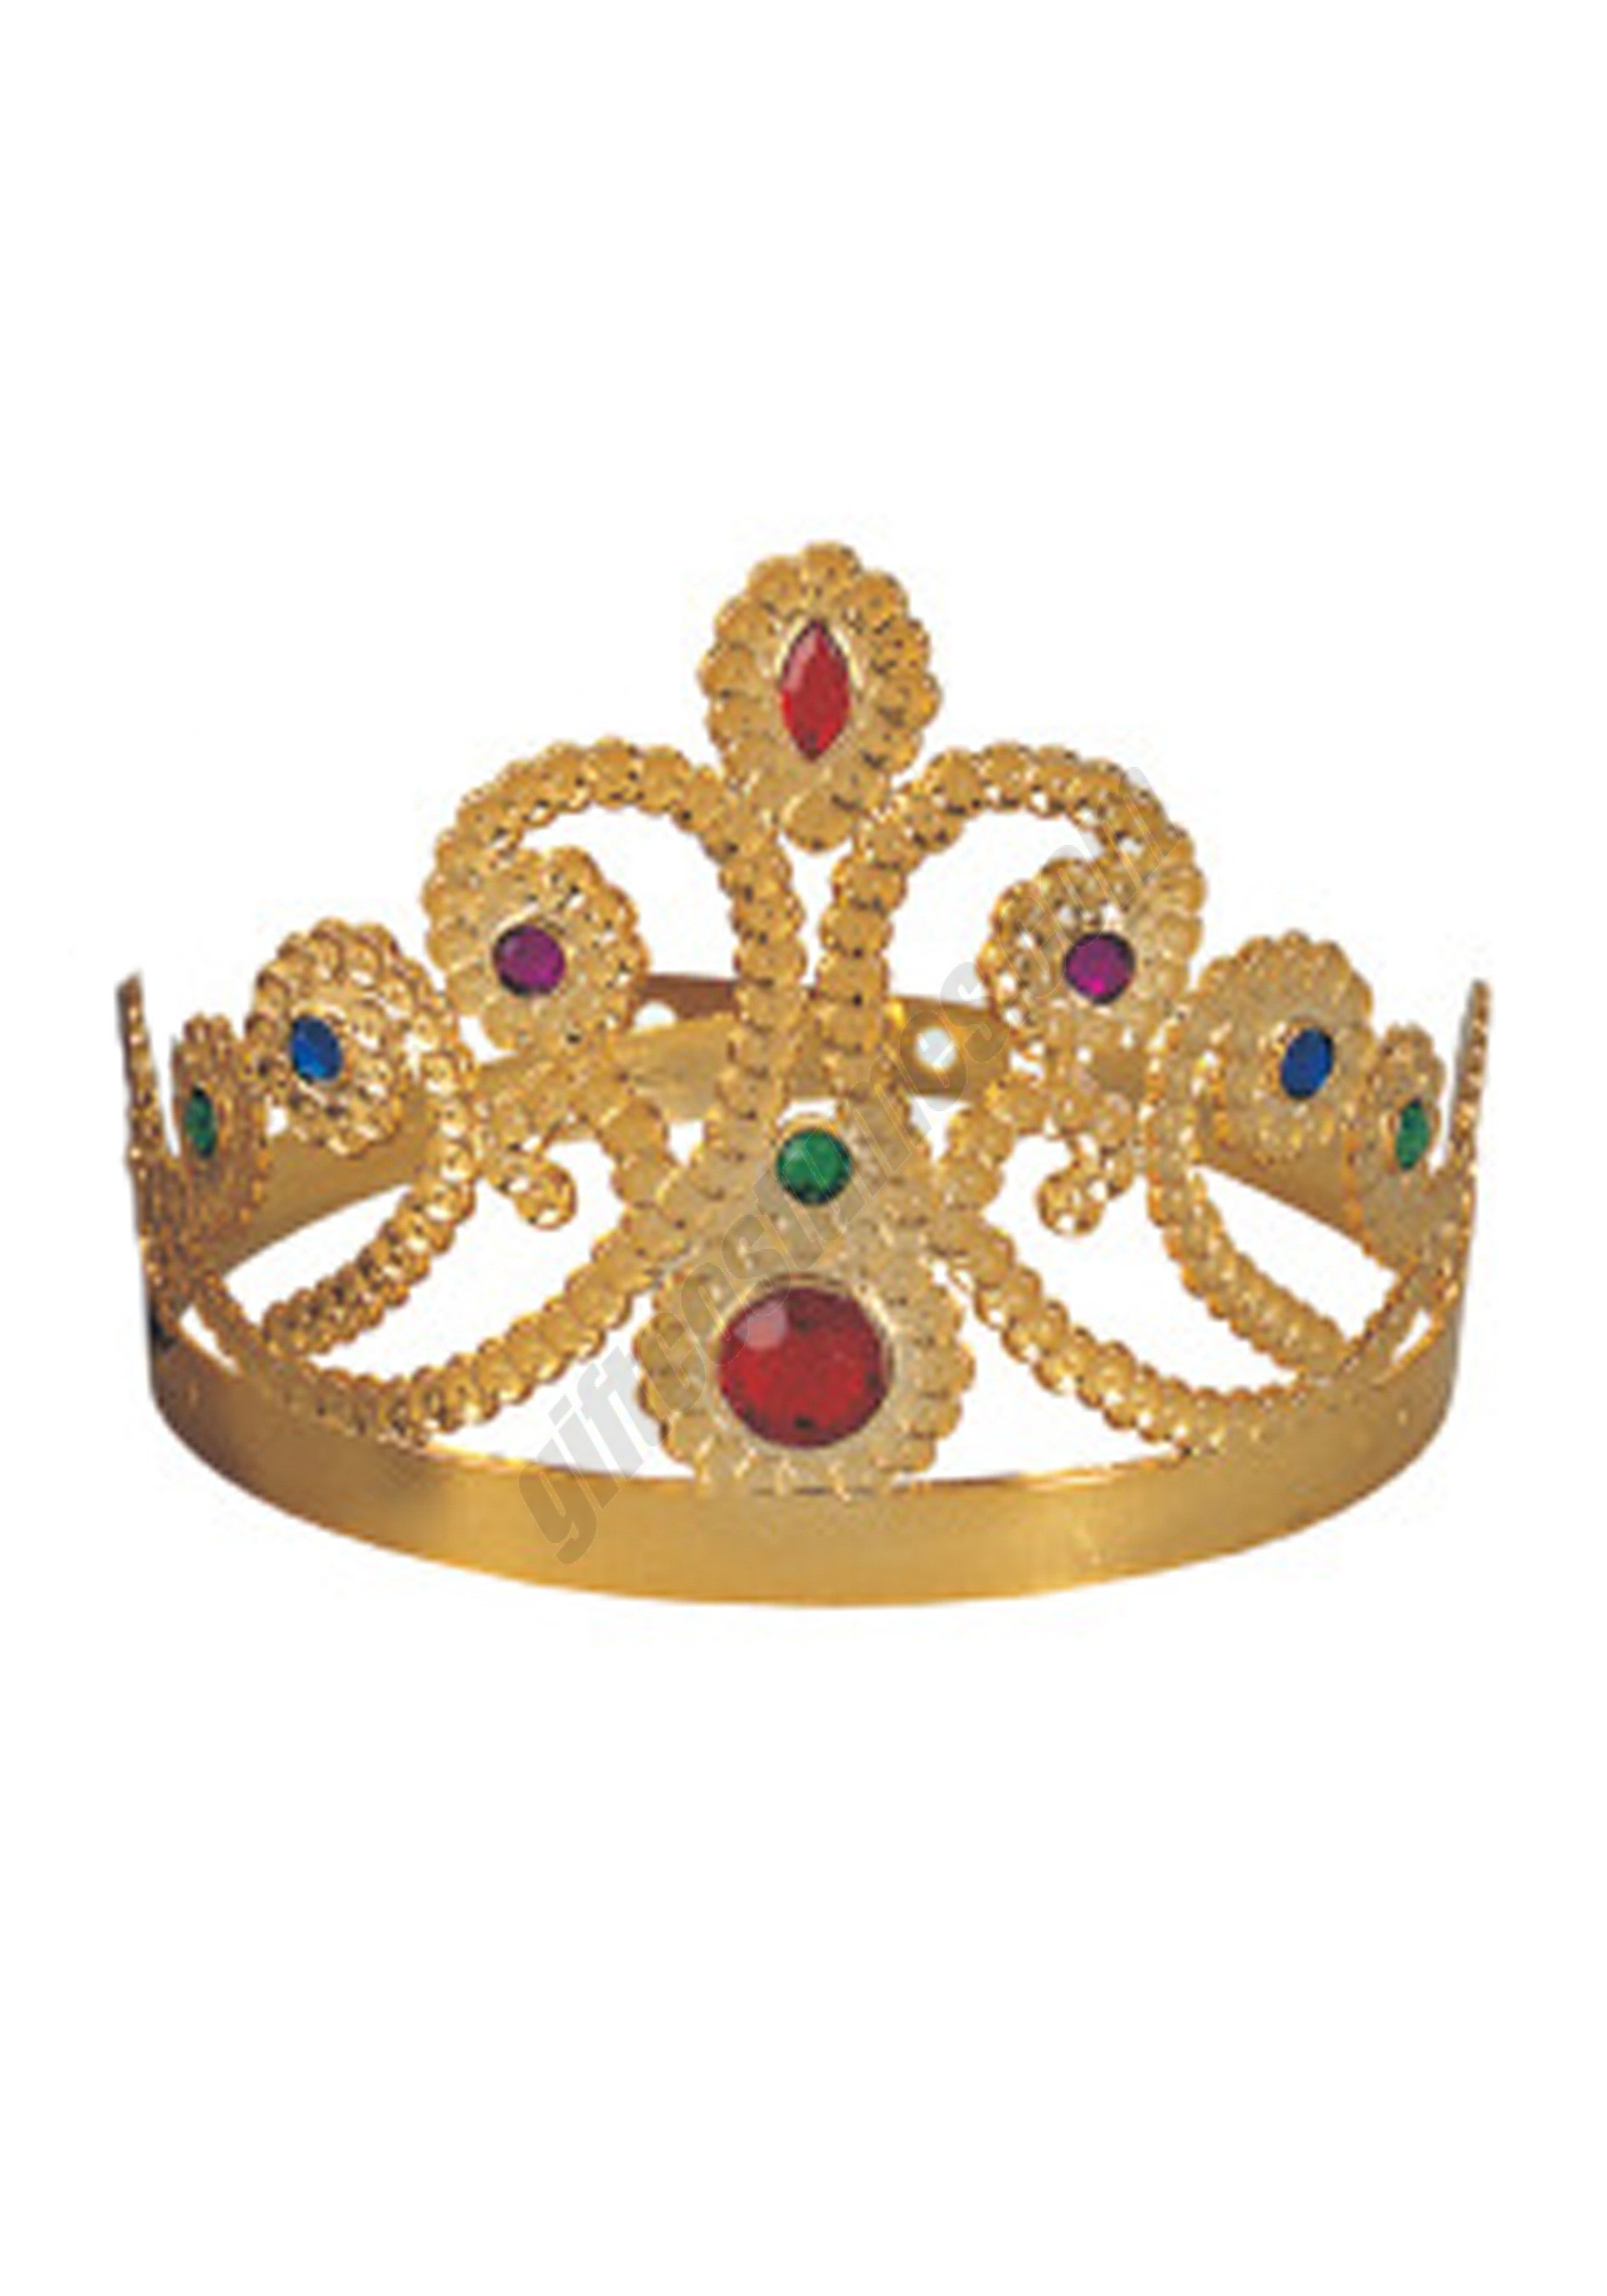 Gold Queen's Tiara Promotions - Gold Queen's Tiara Promotions